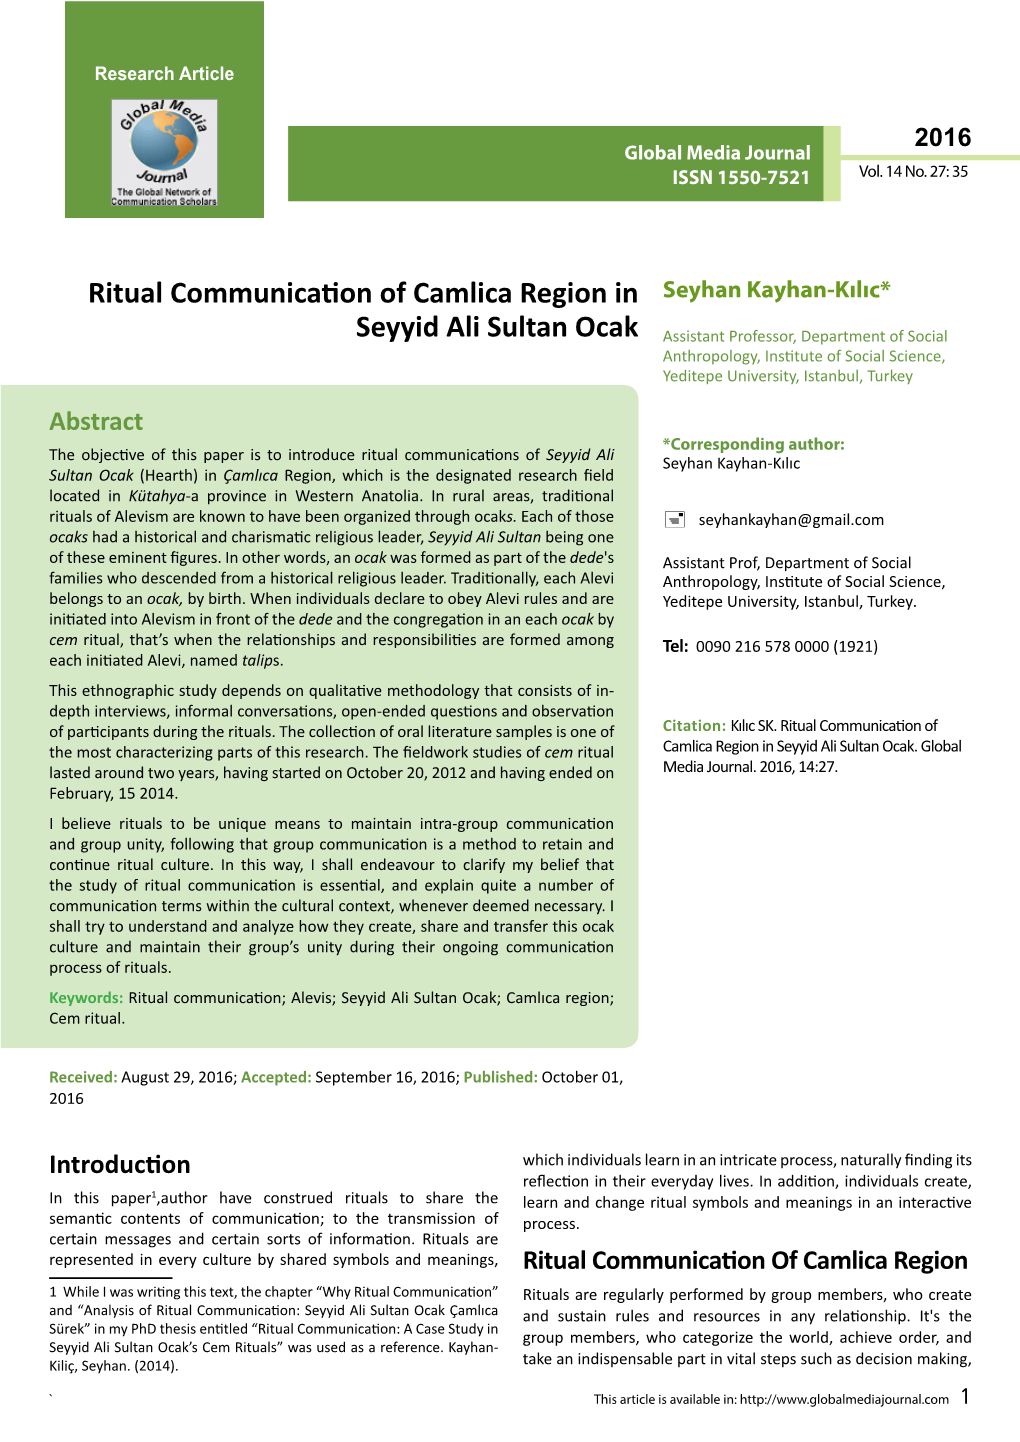 Ritual Communication of Camlica Region in Seyyid Ali Sultan Ocak